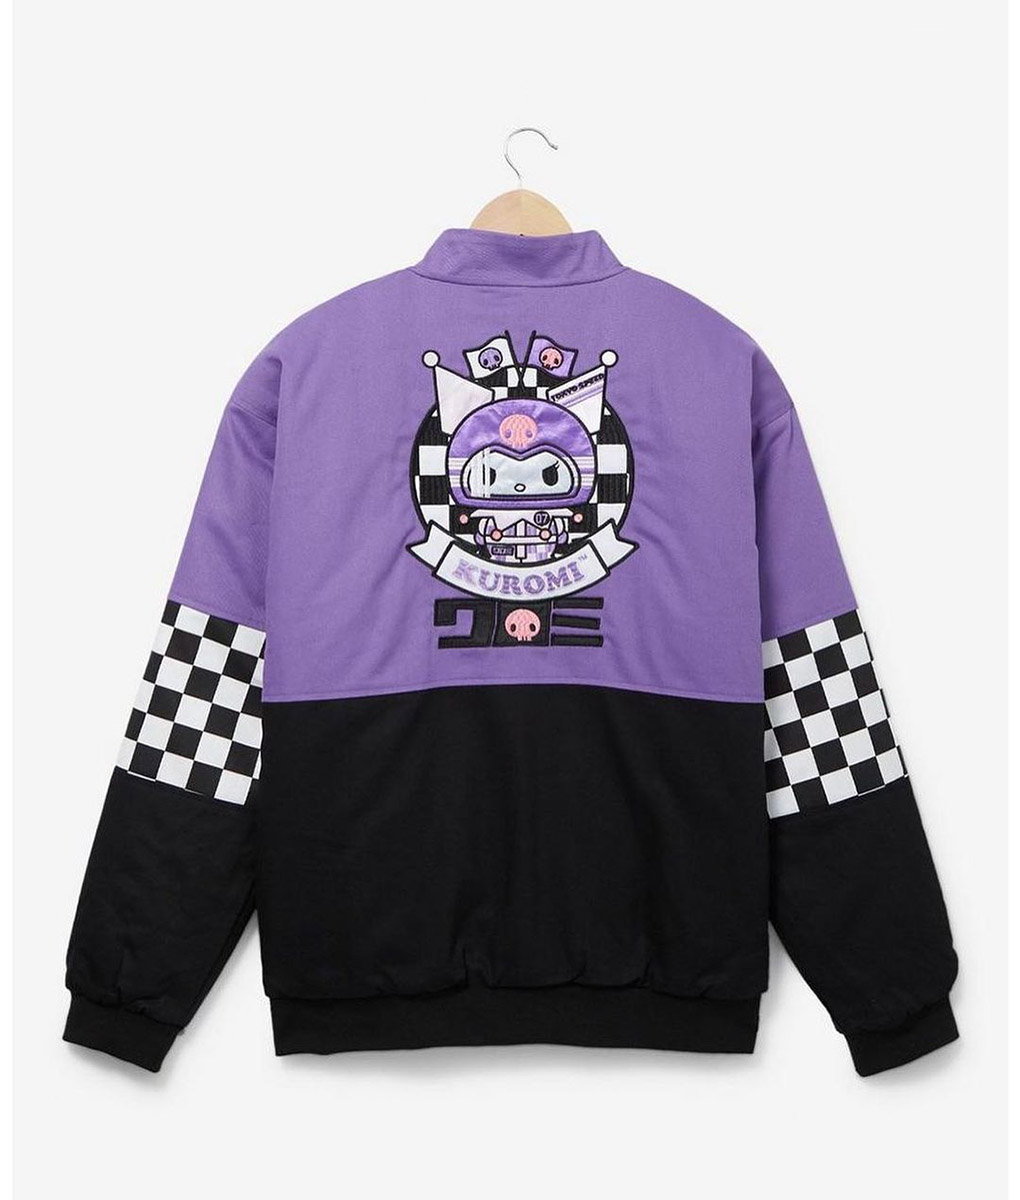 Kuromi Purple and Black Racing Jacket